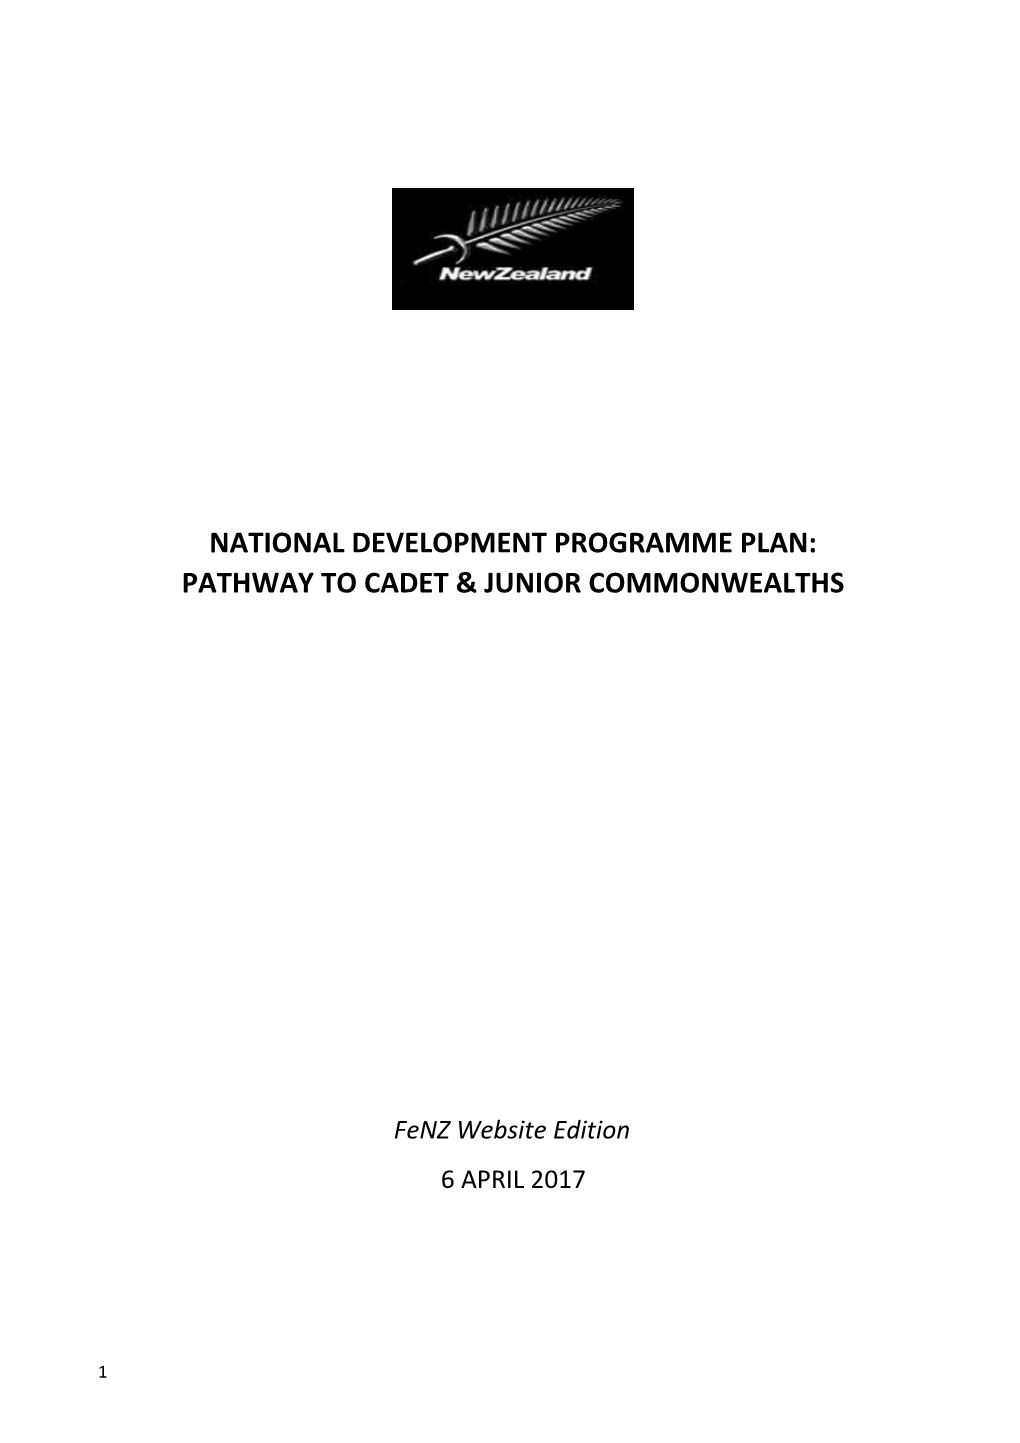 National Development Programme Plan: Pathway to Cadet & Junior Commonwealths